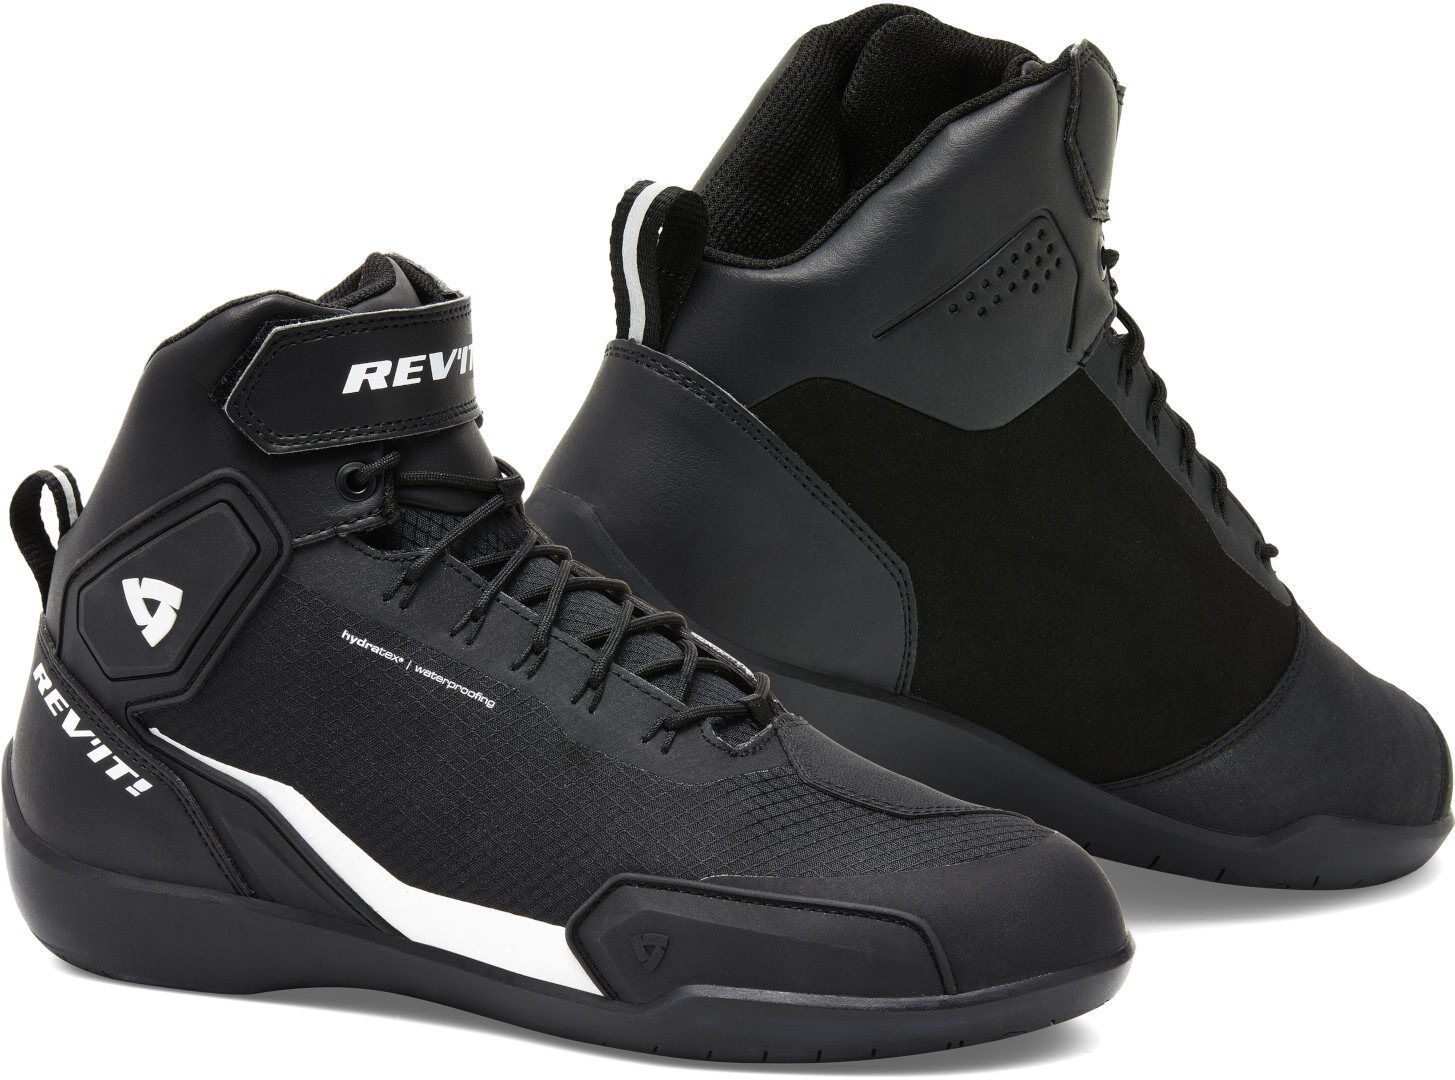 Revit G-Force H2O Zapatos impermeables para motocicletas - Negro Blanco (42)